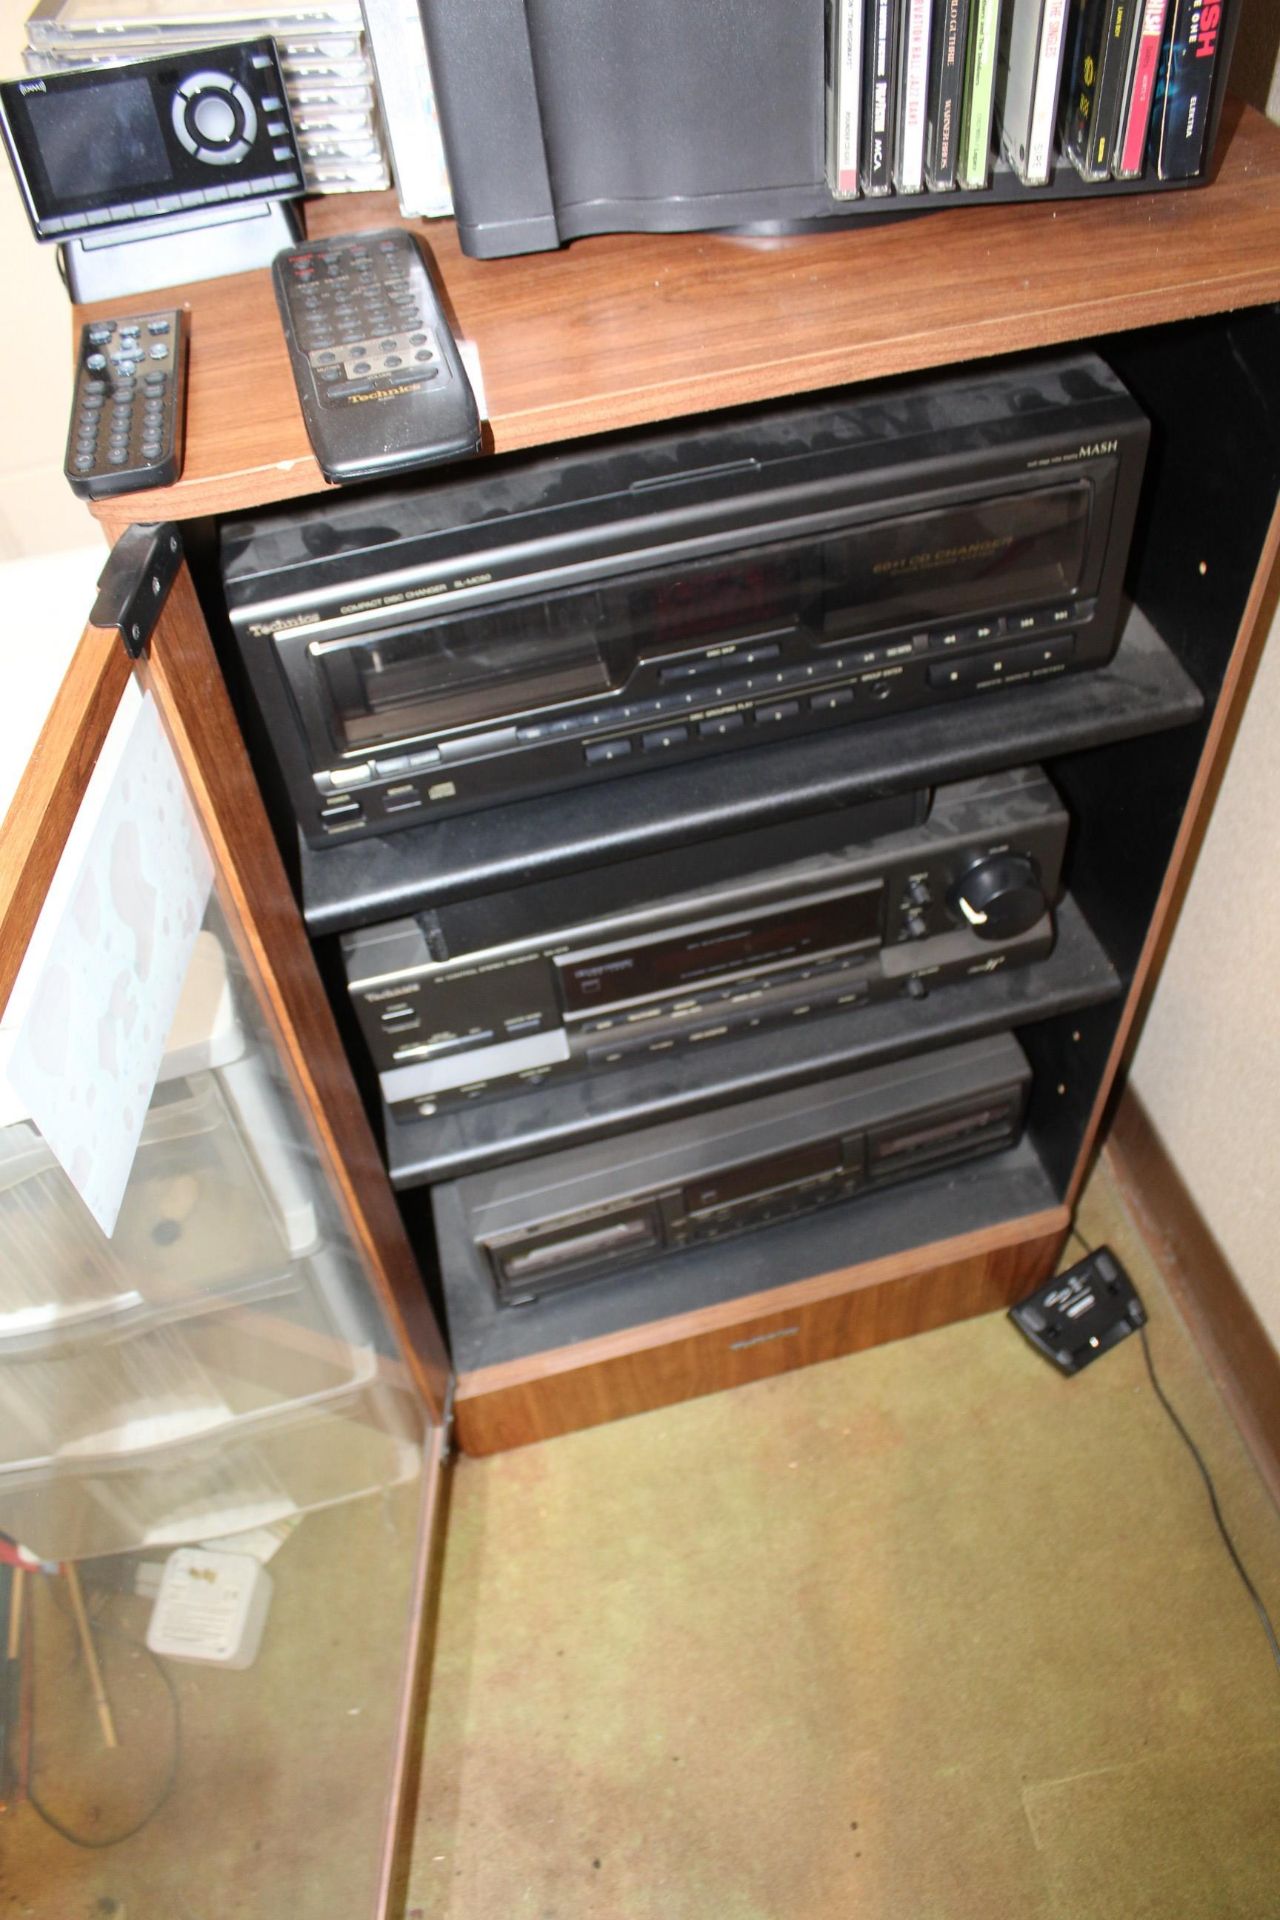 Stereo Equipment, Mash 60 Disc CD Changer, Techniques Receiver, Etc.